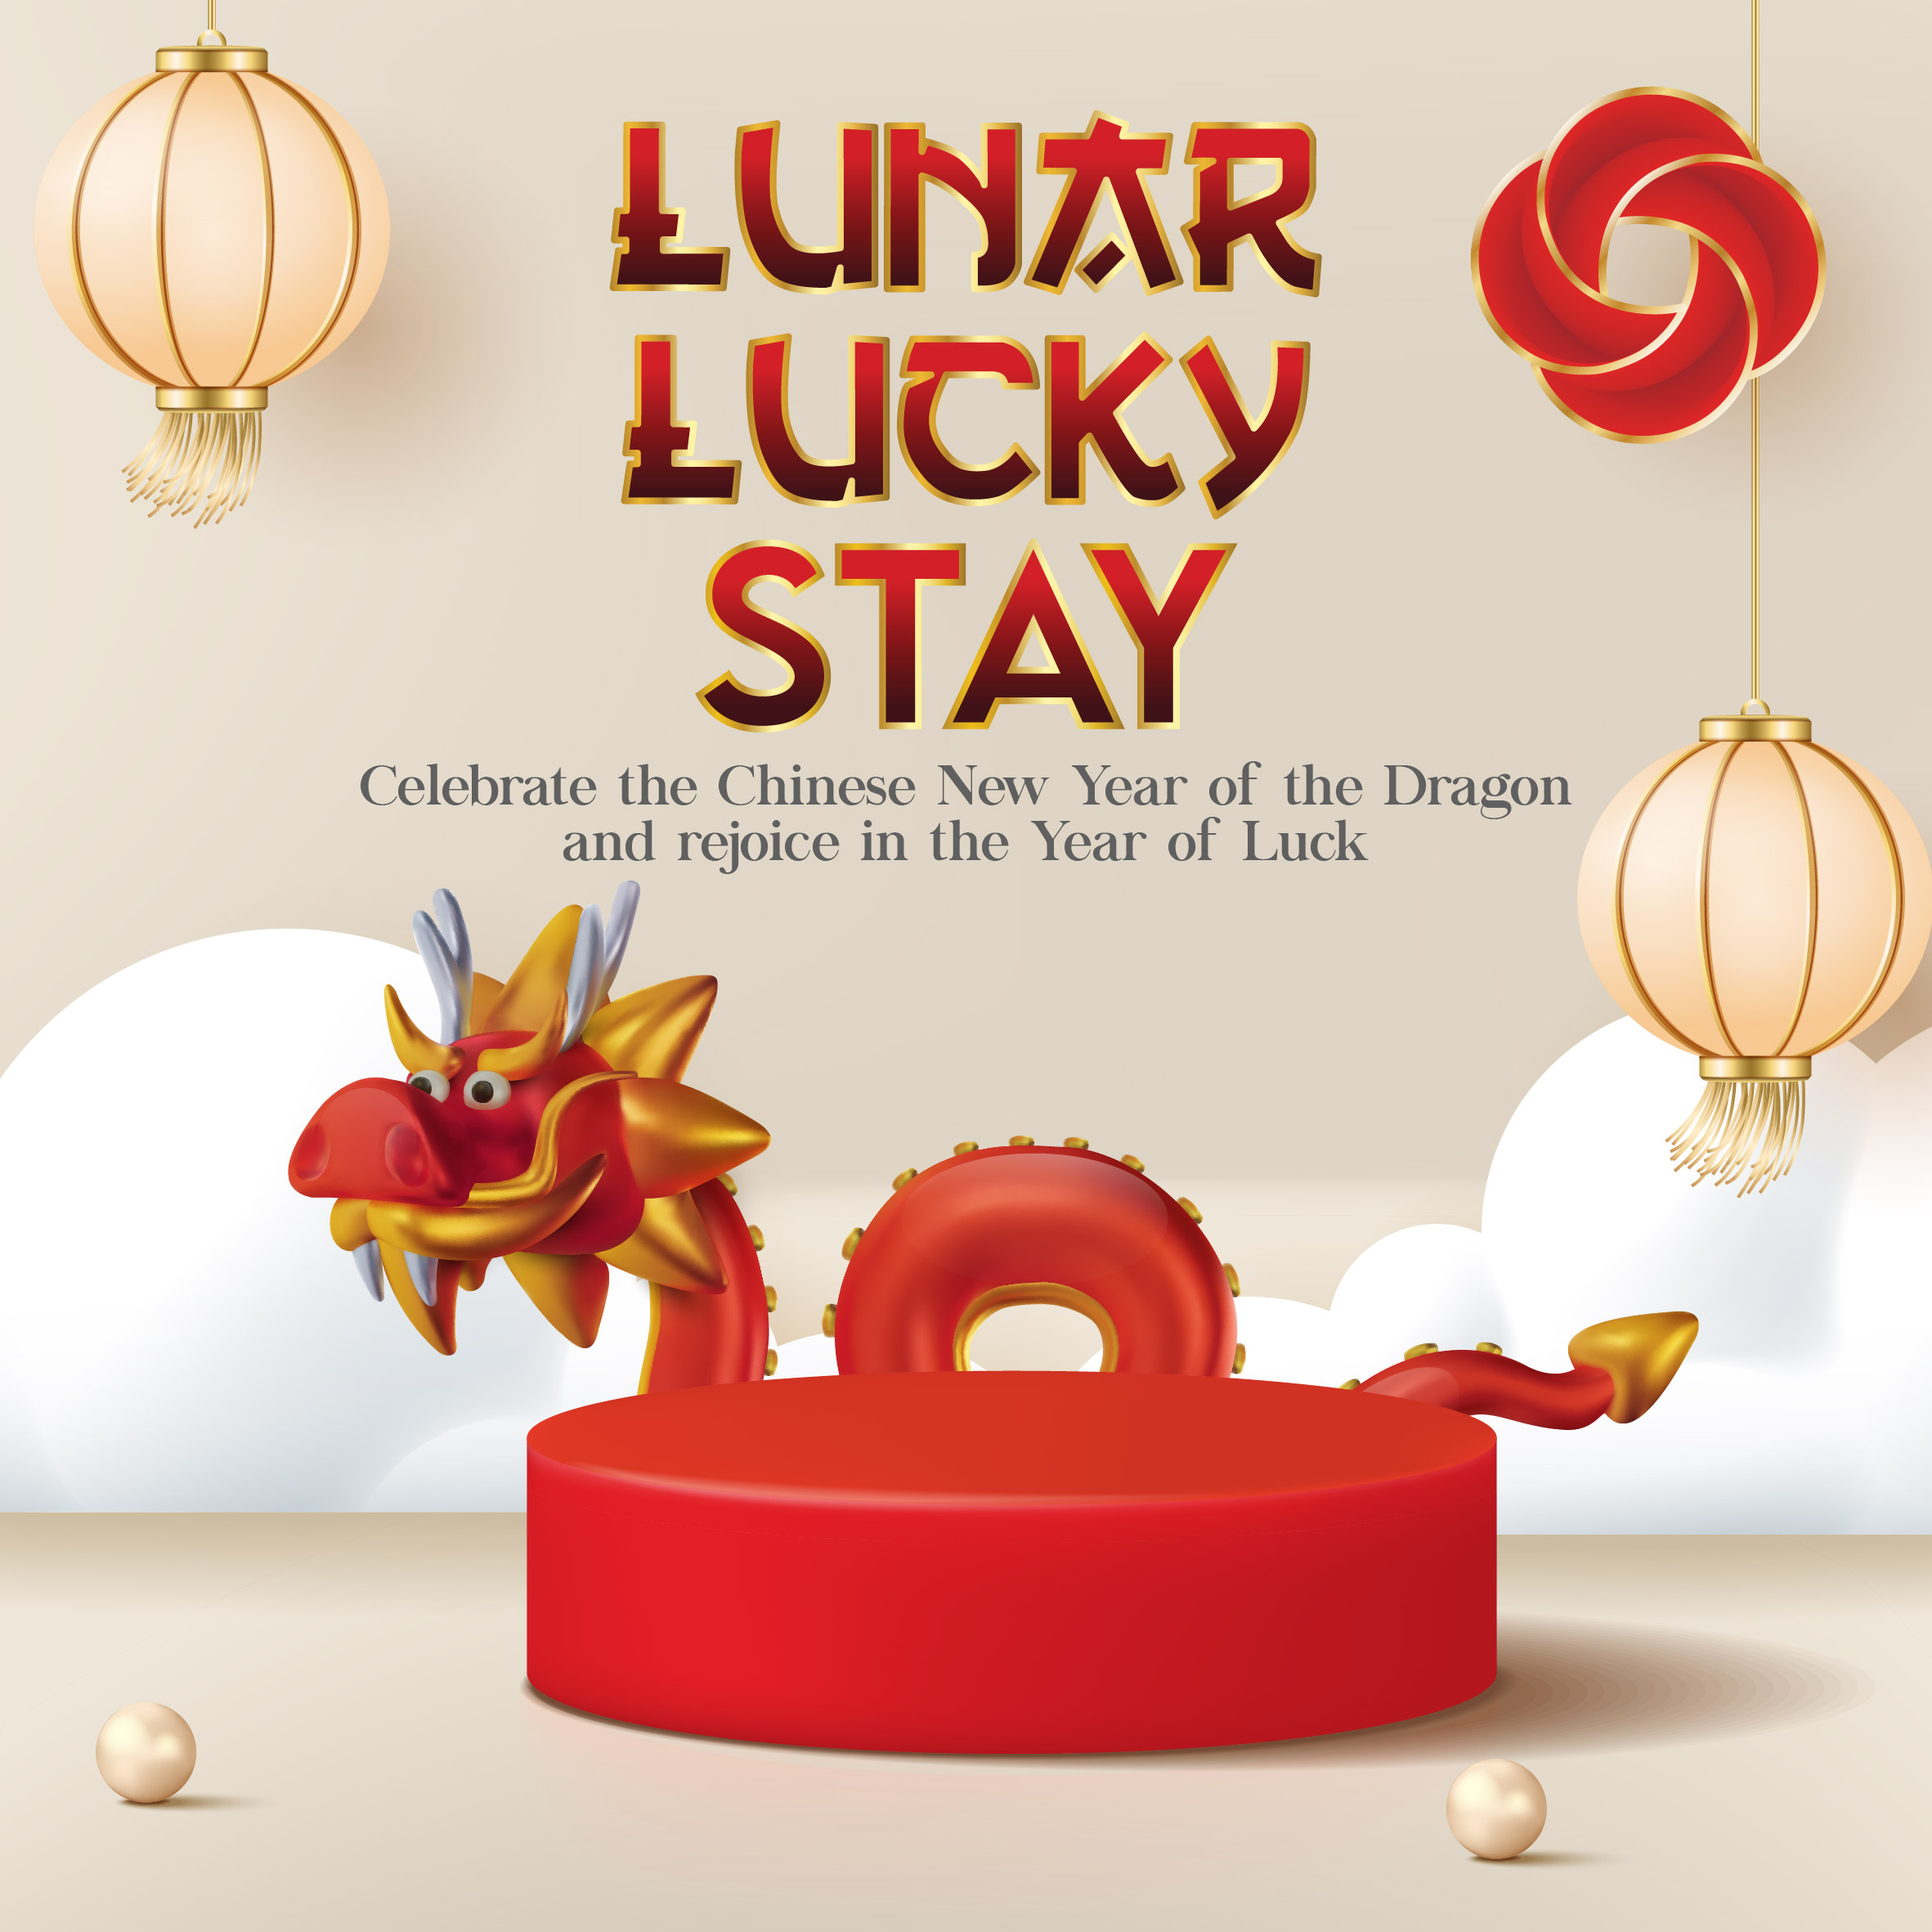 Lunar Lucky Stay